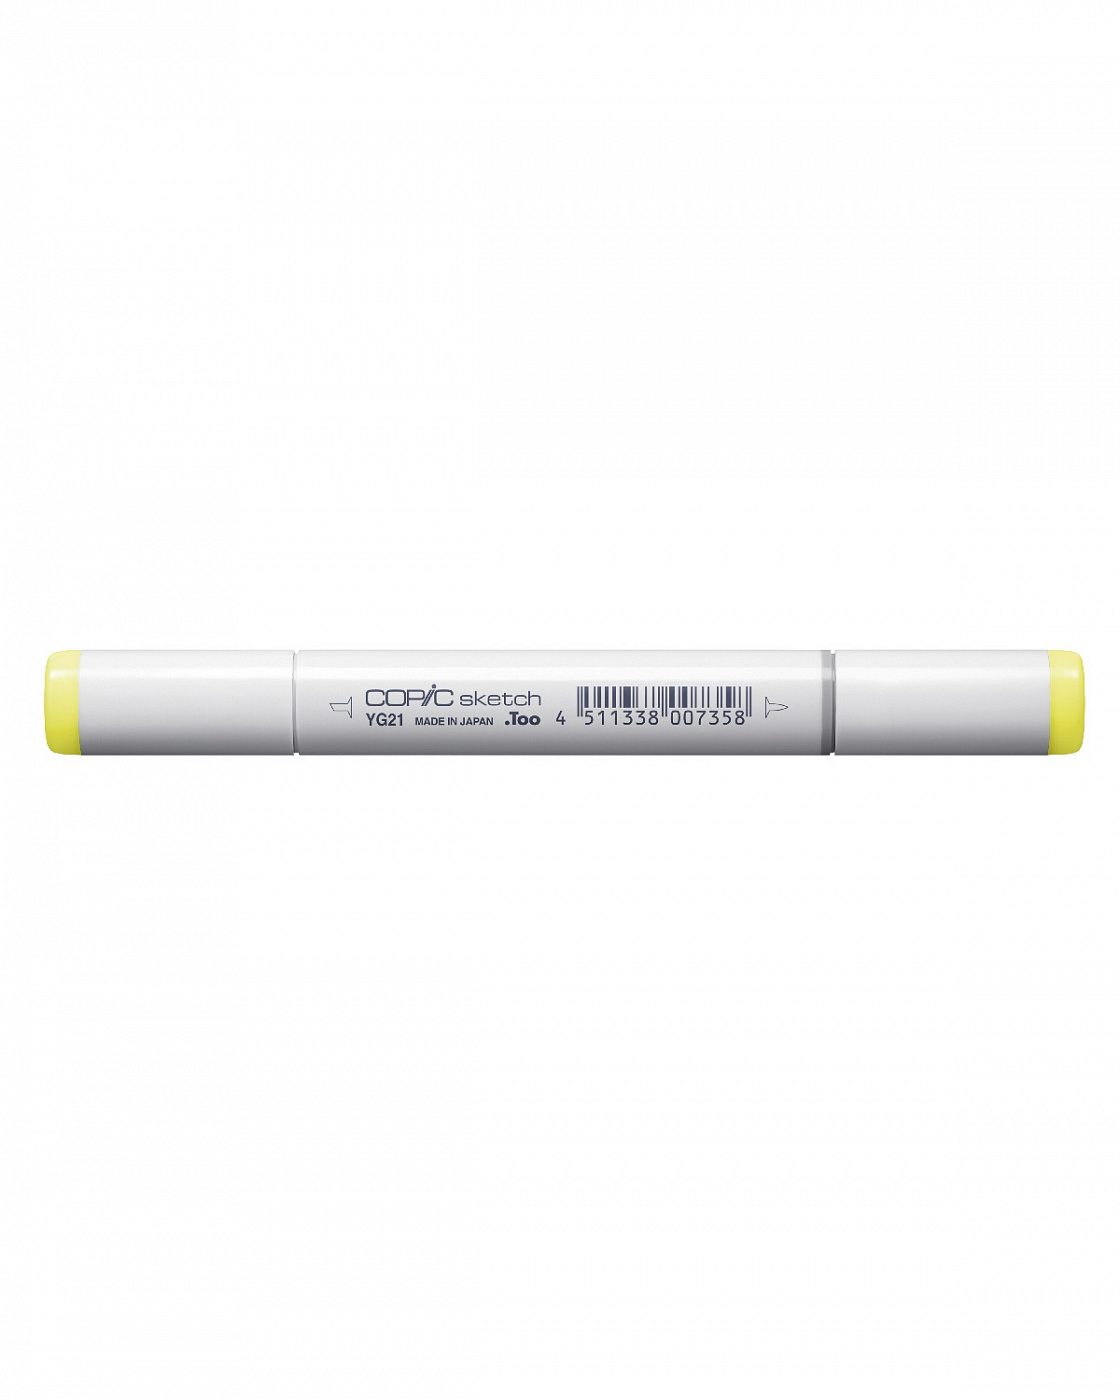 Маркер COPIC sketch YG21 (анис, anise) маркер copic y13 лимонный lemon yellow